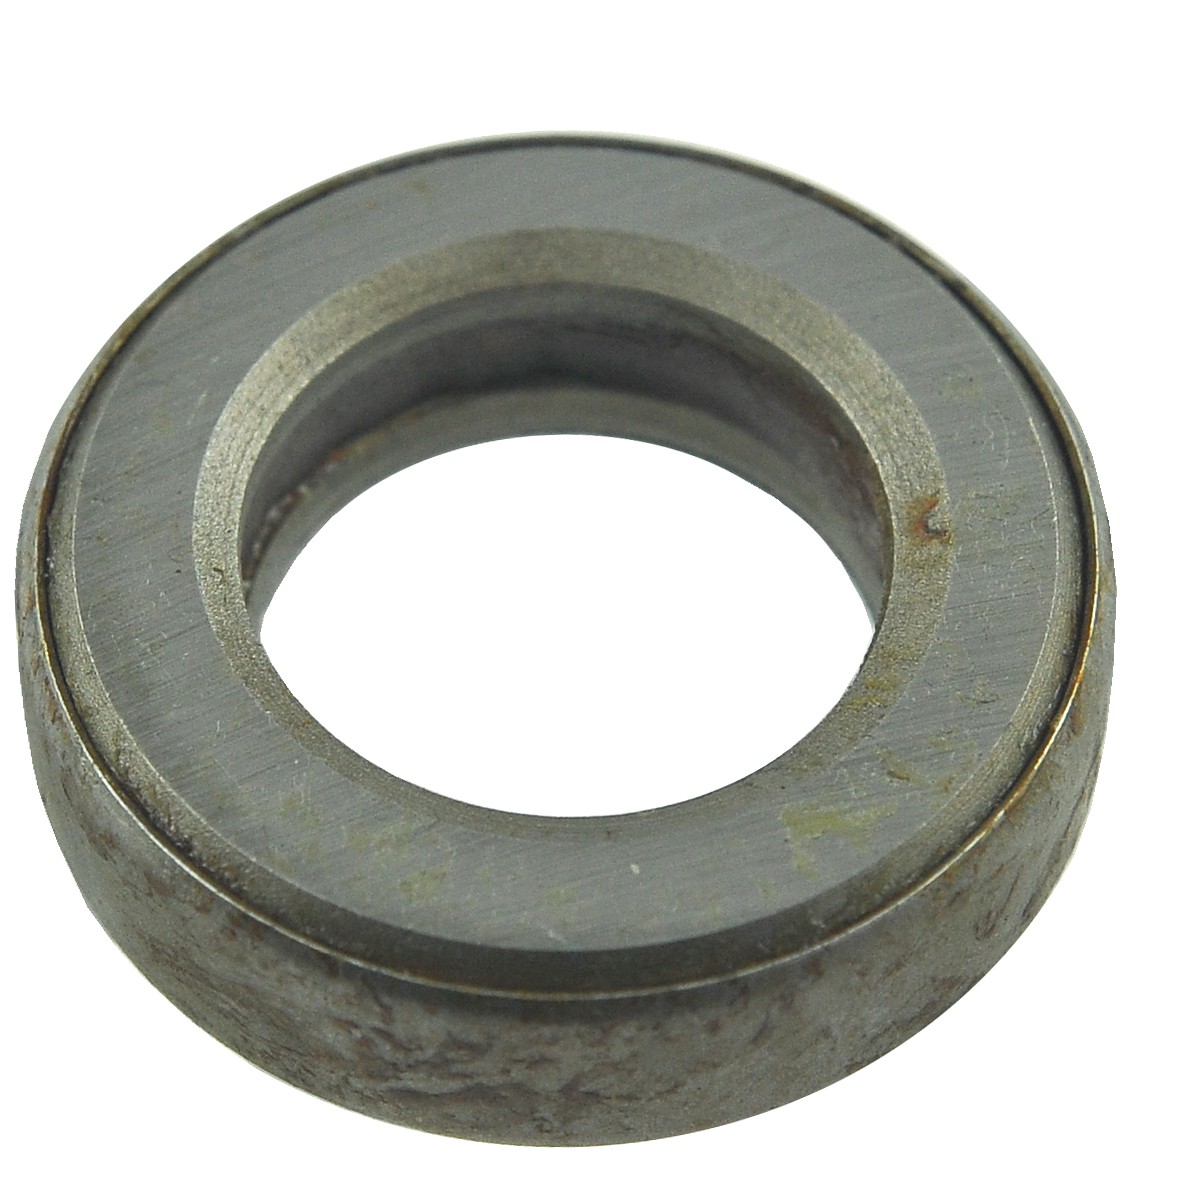 Knuckle bearing / 30.50 x 51 x 14 mm / Kubota L240 / 5-23-109-03